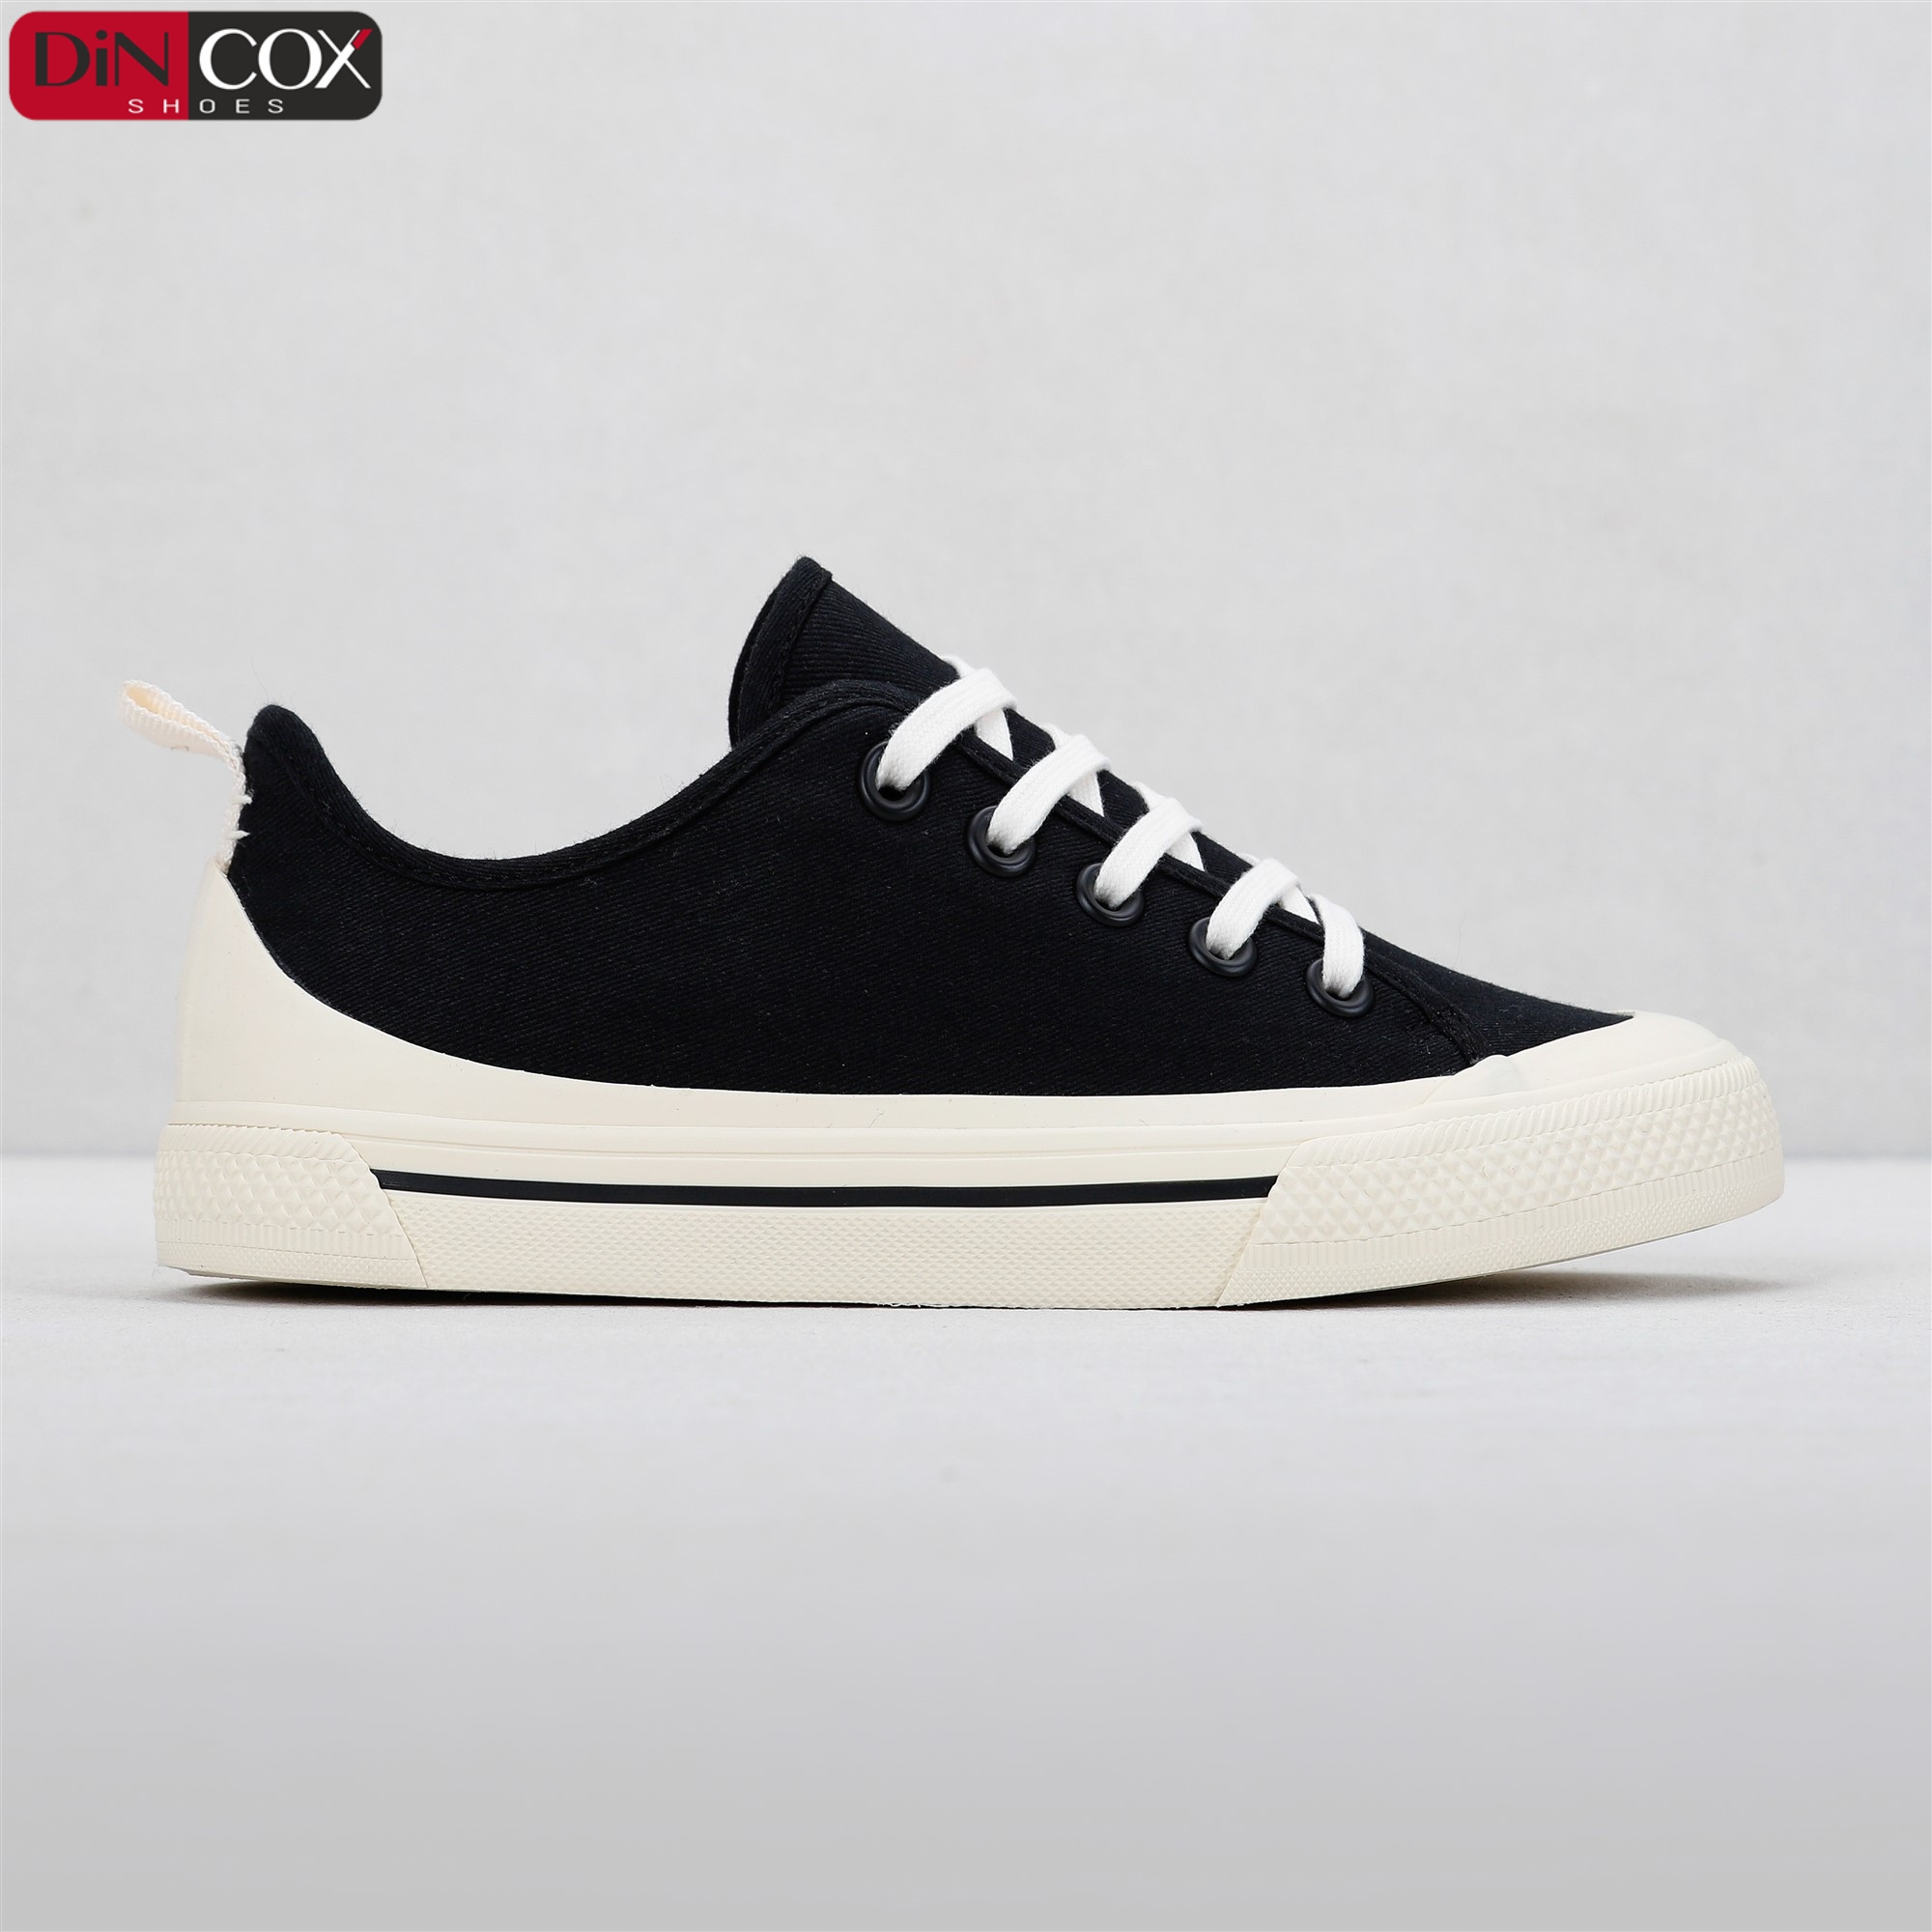 Giày Sneaker Dincox C20 Black